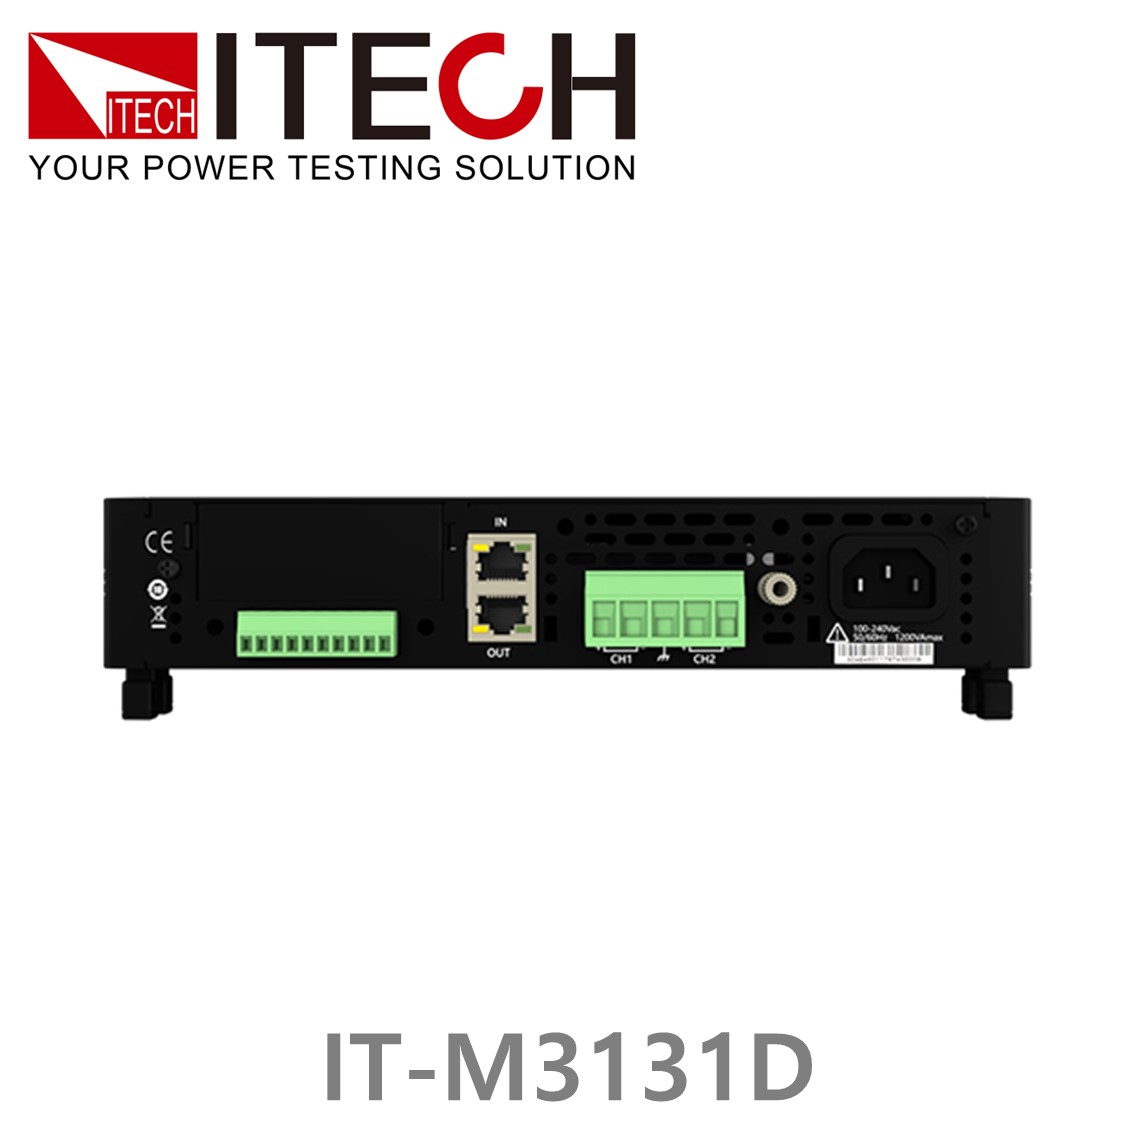 [ ITECH ] IT-M3131D 듀얼 채널 채널 프로그래머블 DC파워서플라이,DC 전원공급기 30V/15A/200W